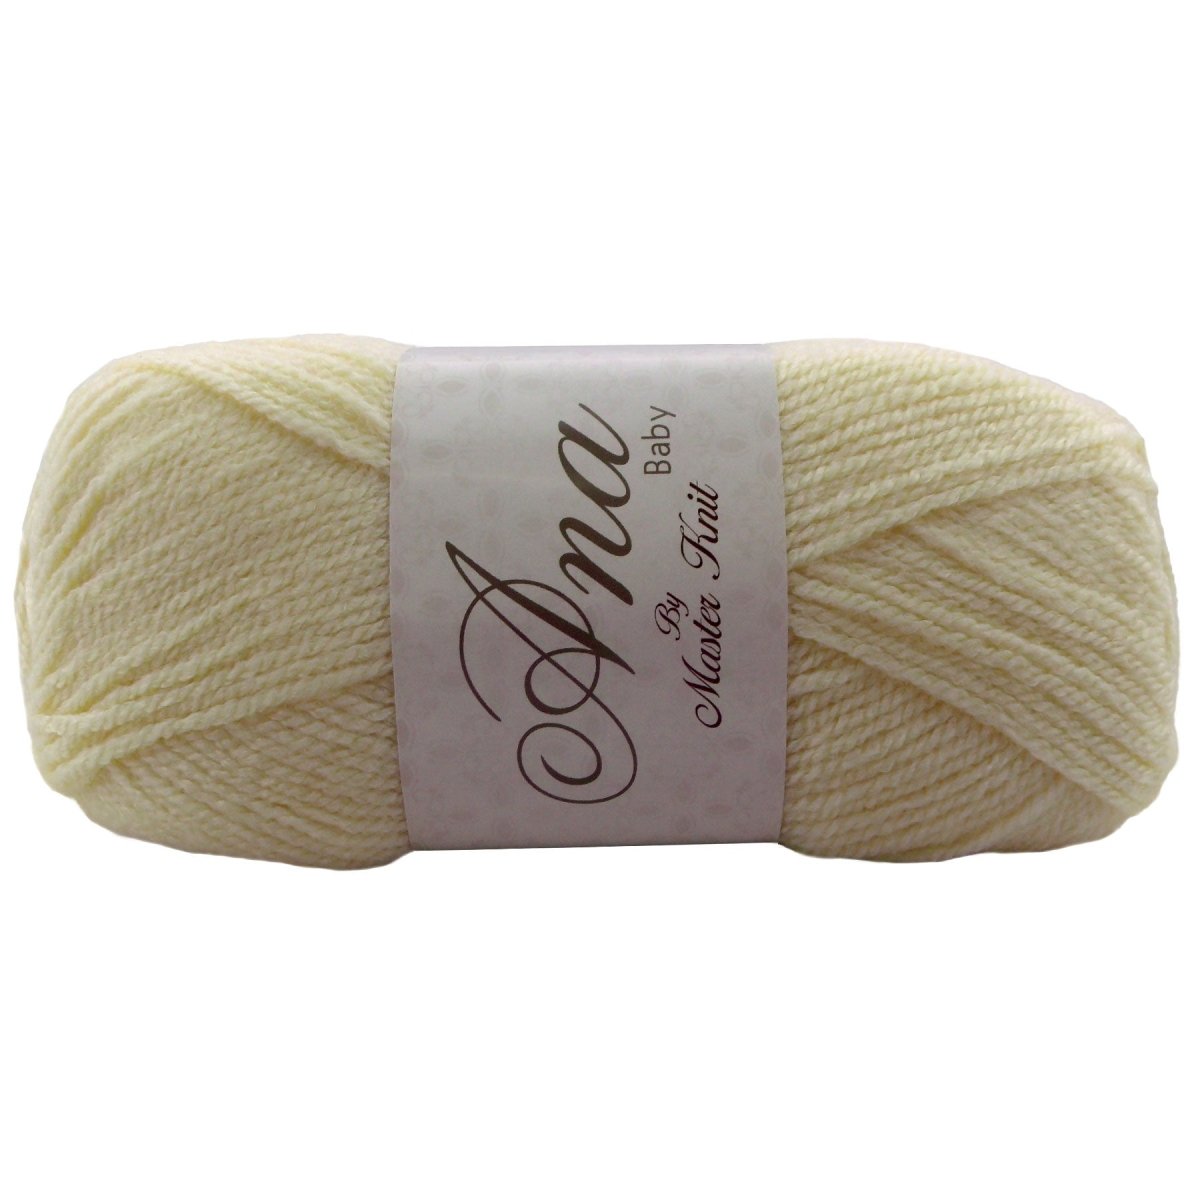 ANA BABY - Crochetstores9170-448